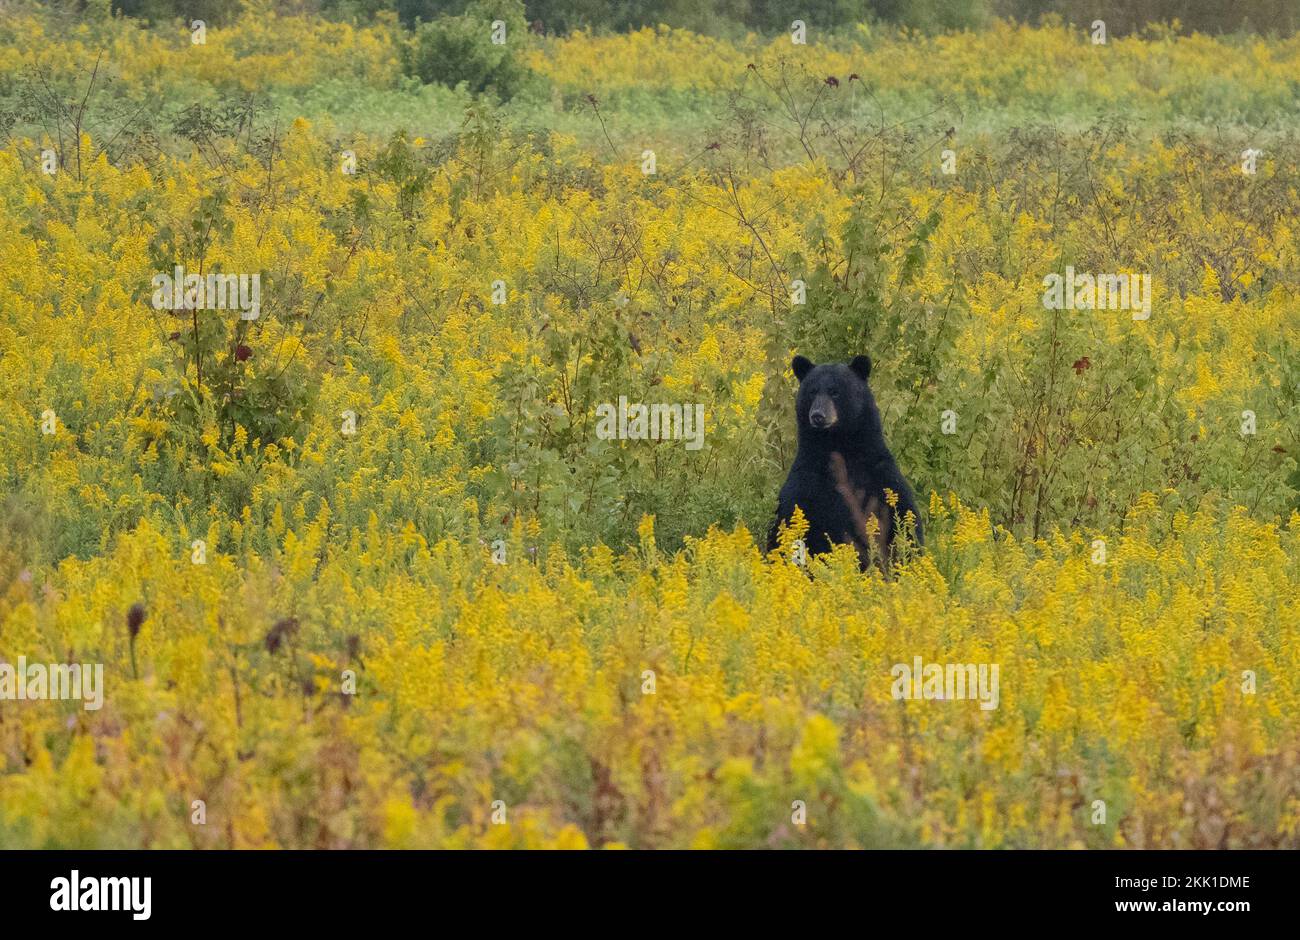 American Black Bear (Ursus americanus) standing in field of goldenrod Stock Photo